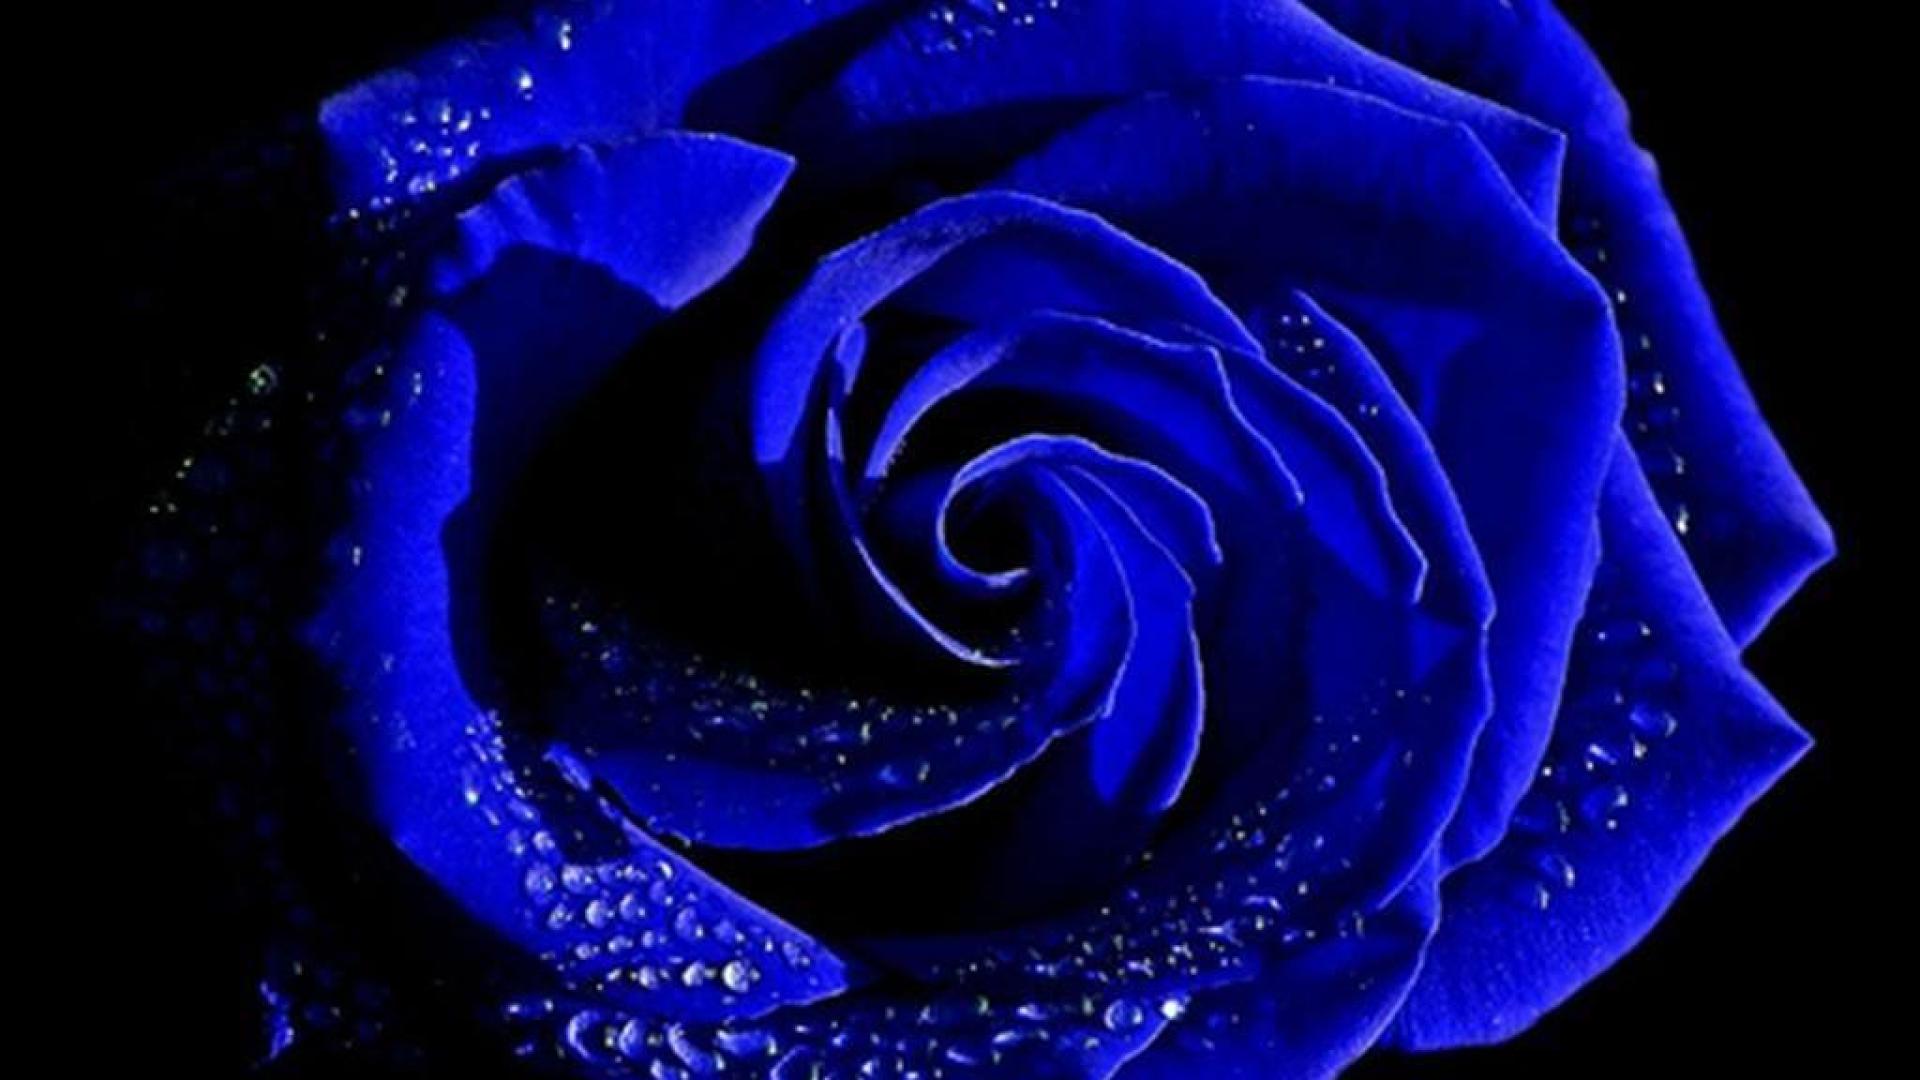 Indigo Blue Rose Wallpaper Hq Desktop